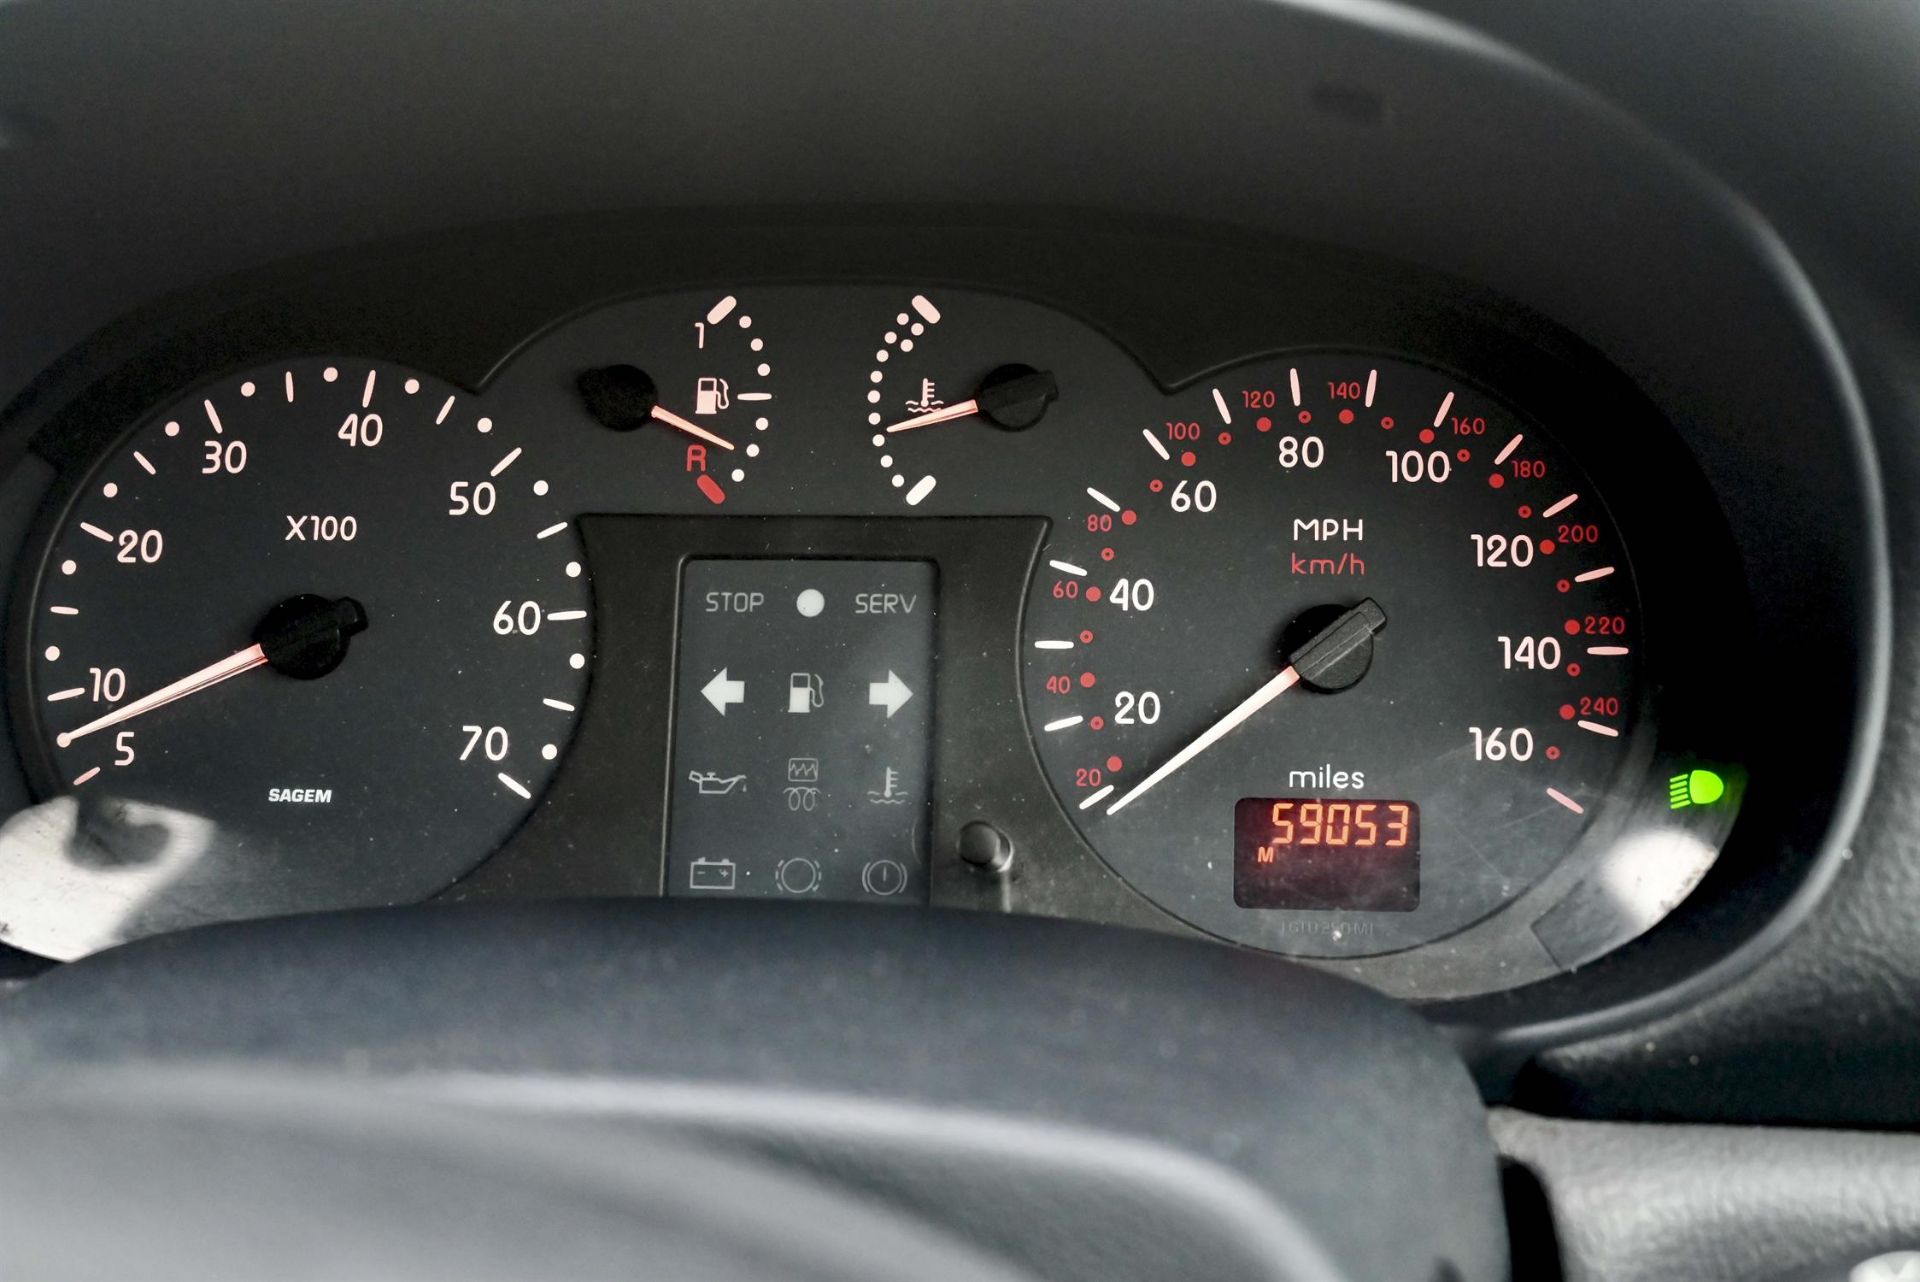 2000 Renault Clio 1.4 Etoile Hatchback. Registration number X174 FGW - Petrol, 5-Speed Manual. - Image 12 of 13